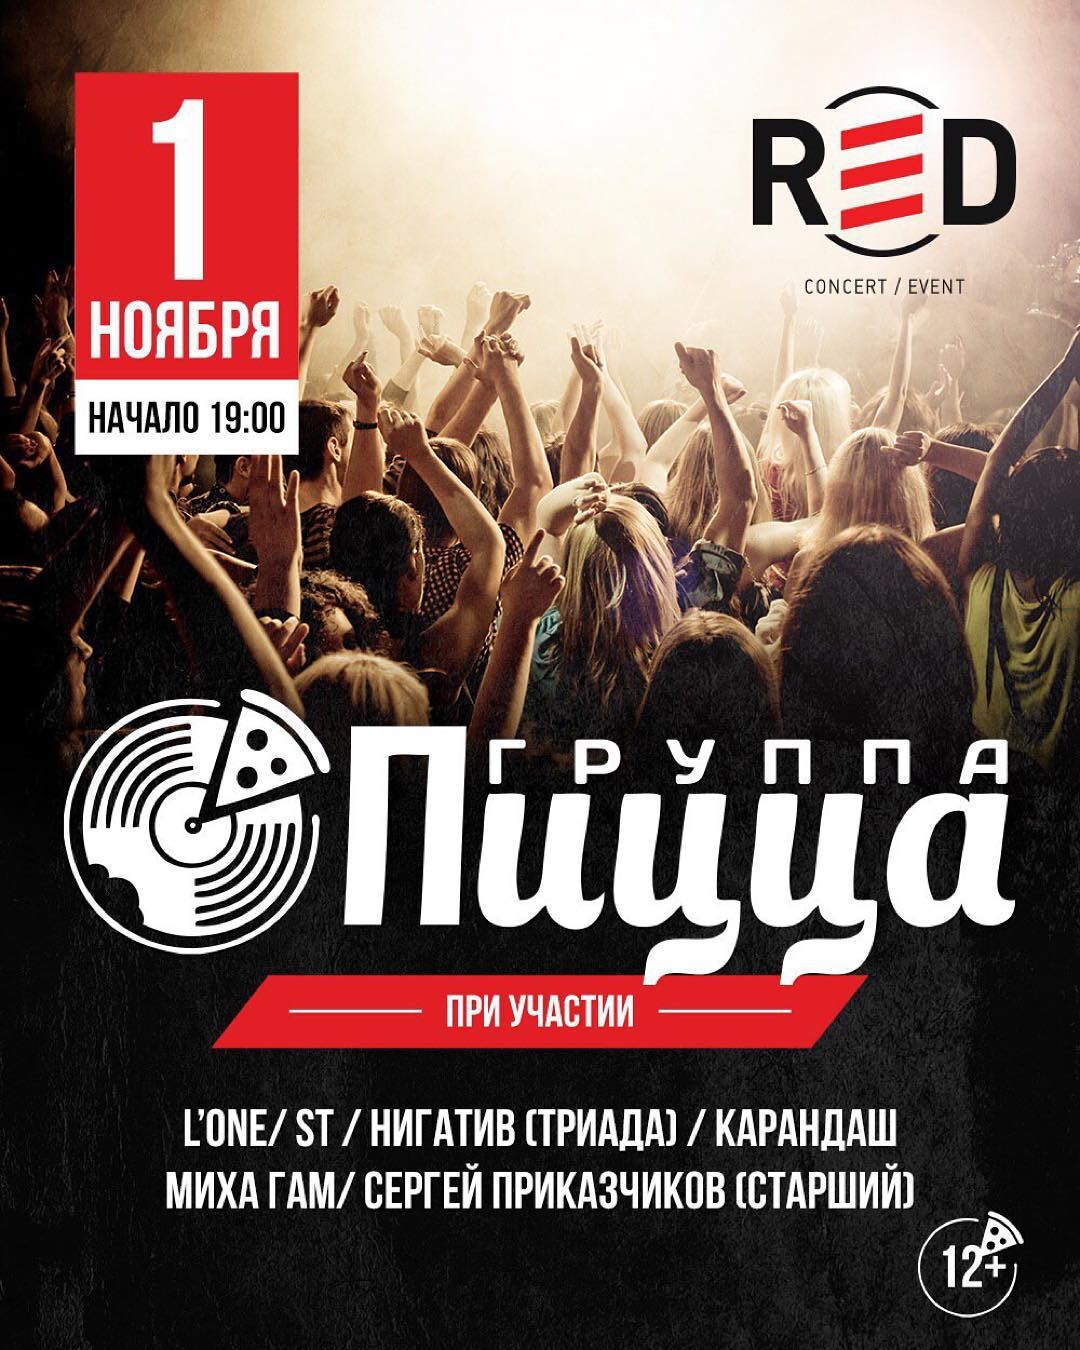 Пицца концерт. Пицца концерт в Москве. Пицца в концертном клубе. Red Concert.